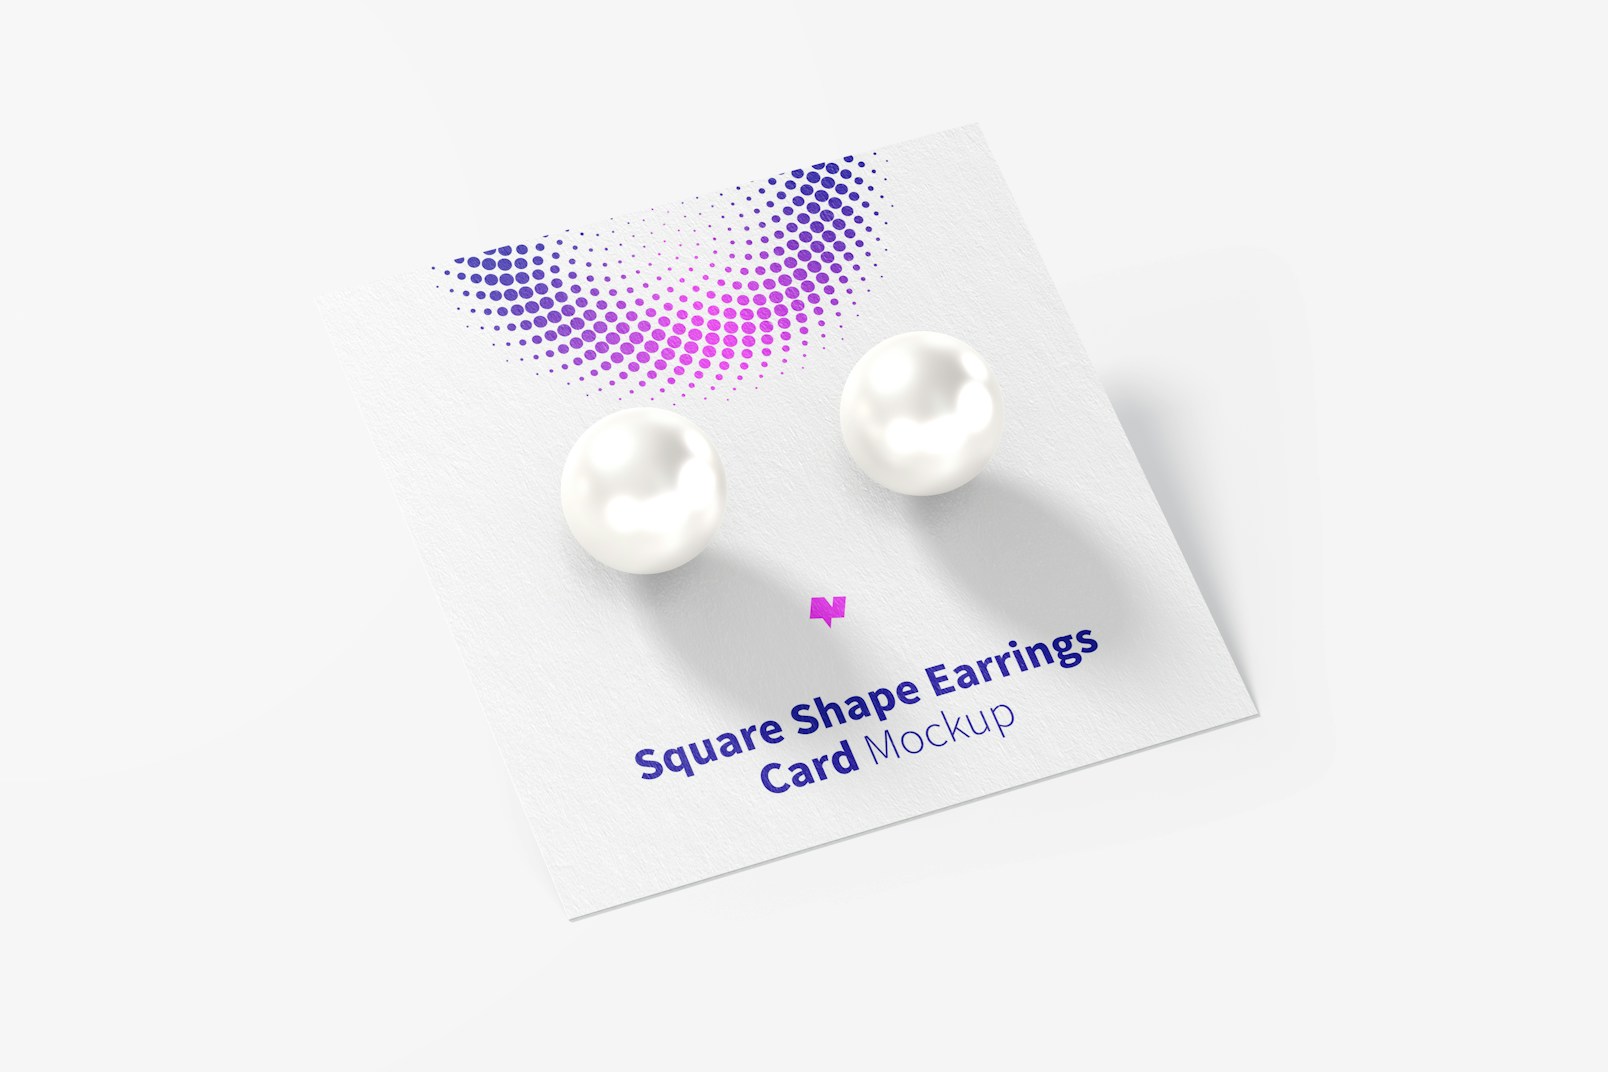 Square Shape Earrings Card Mockup, Top View